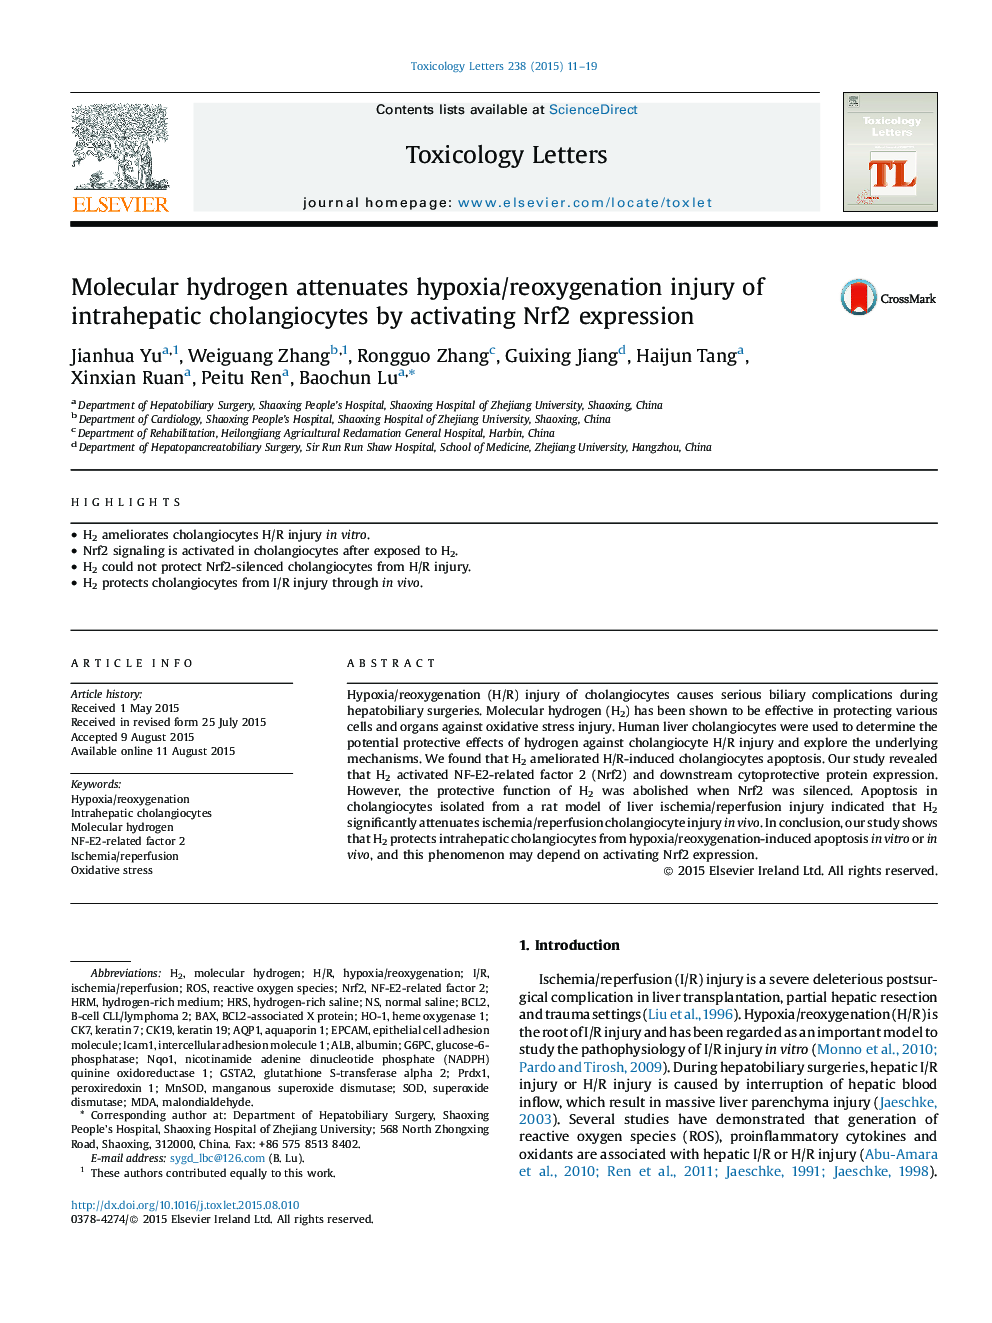 Molecular hydrogen attenuates hypoxia/reoxygenation injury of intrahepatic cholangiocytes by activating Nrf2 expression